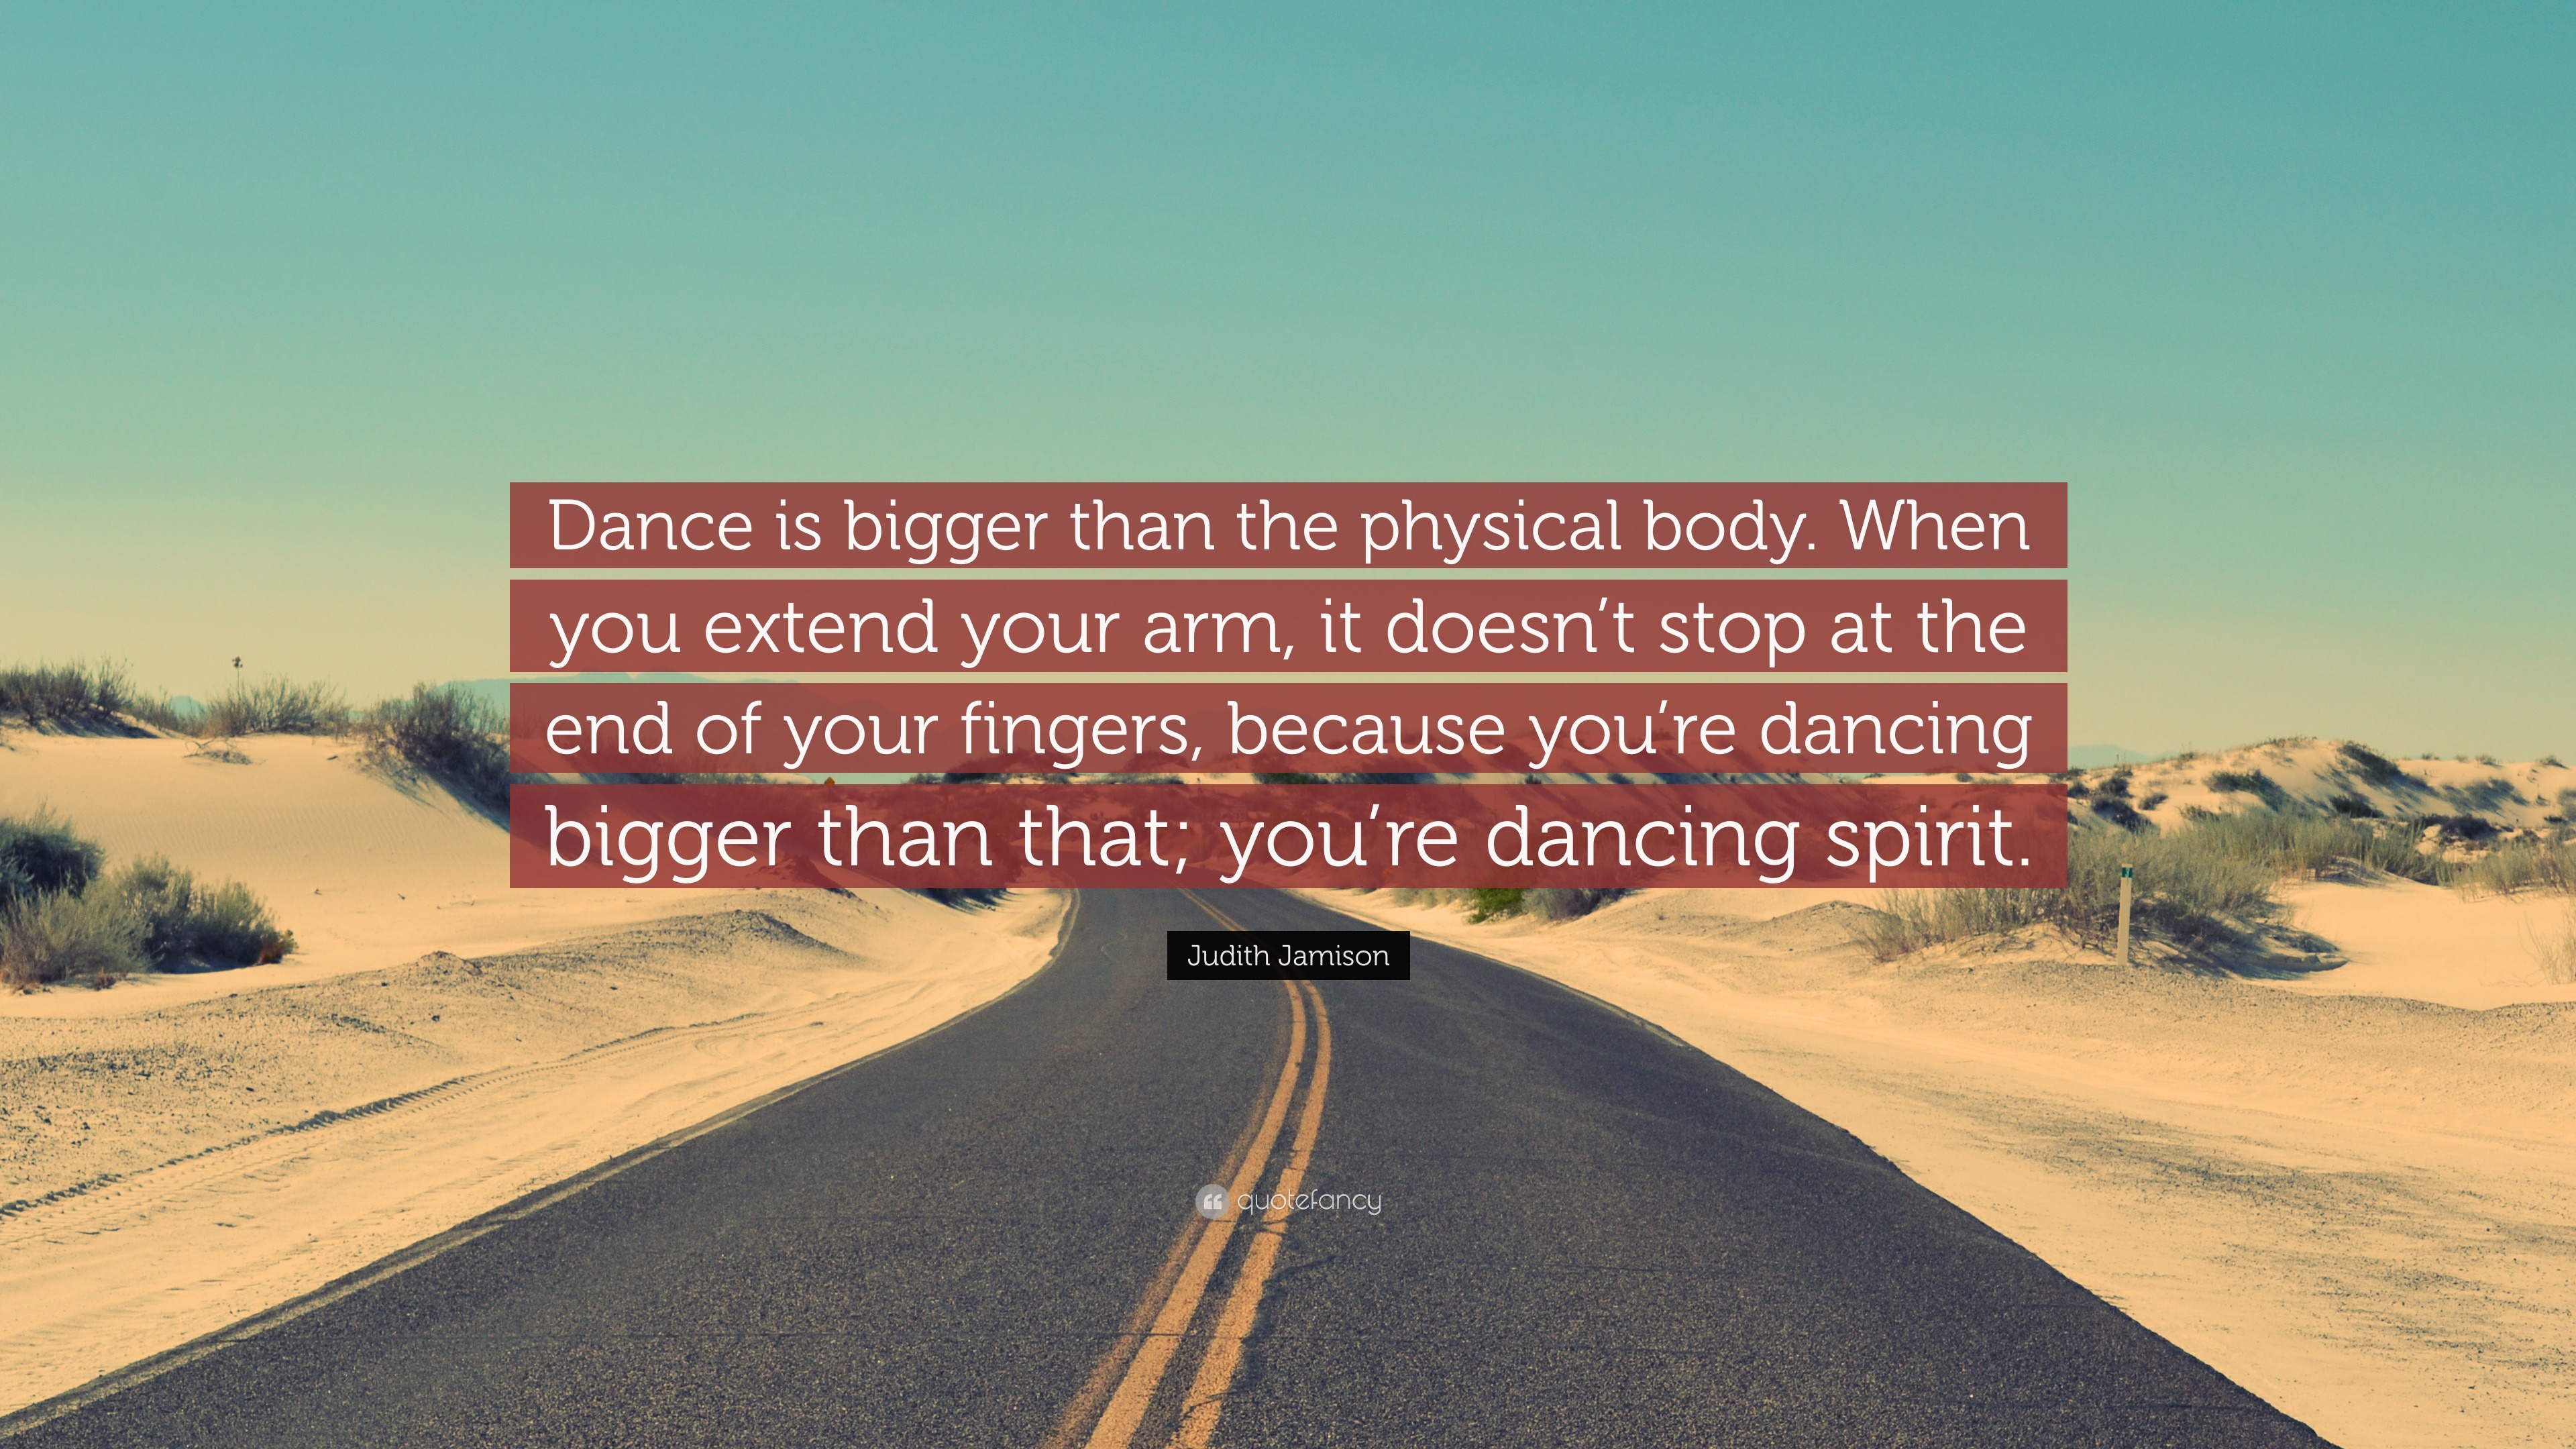 Dancing Spirit by Judith Jamison